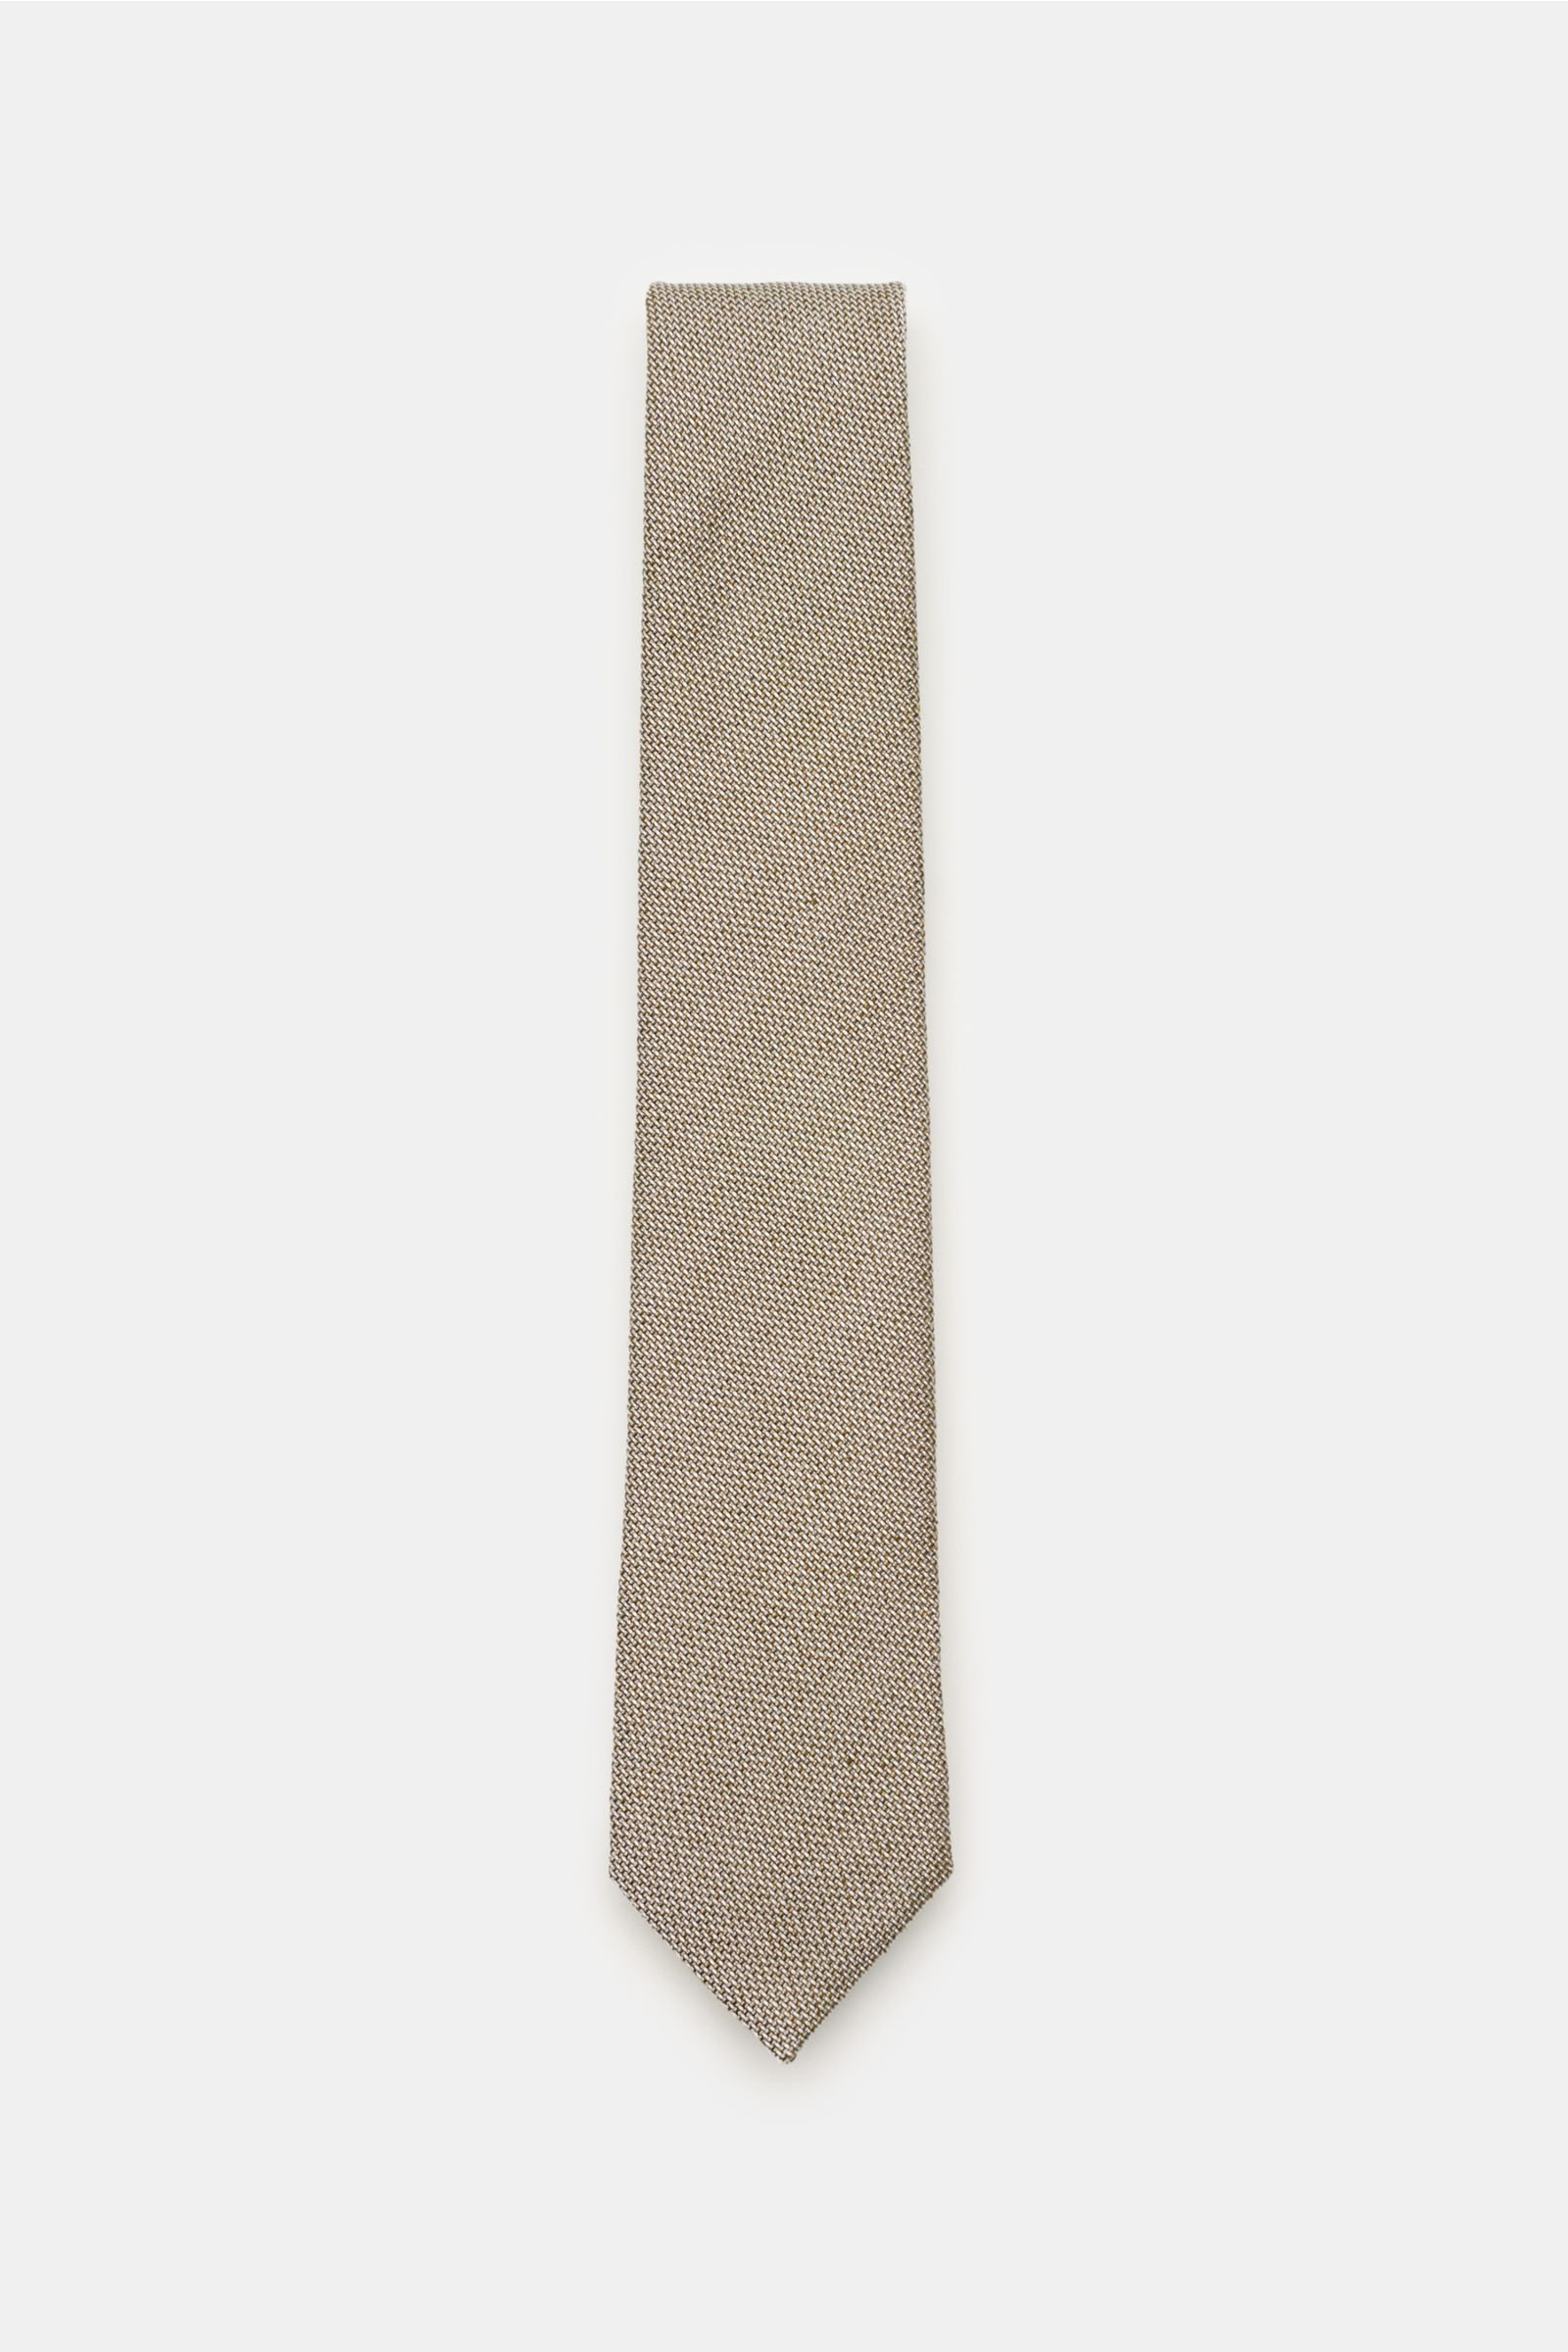 Krawatte graugrün